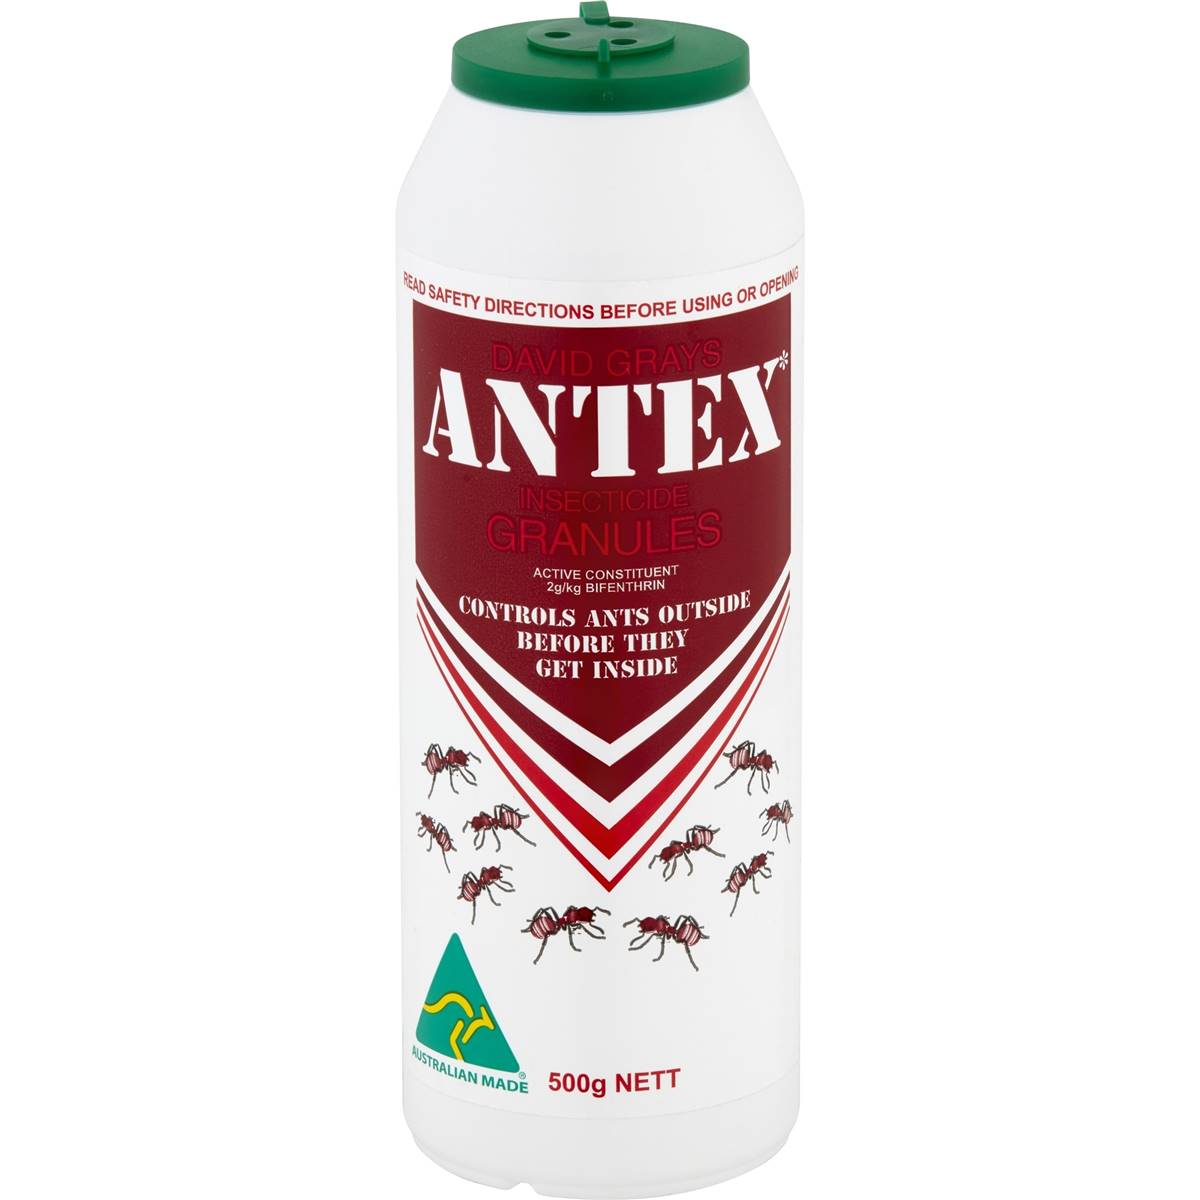 Antex Insect Control Granules